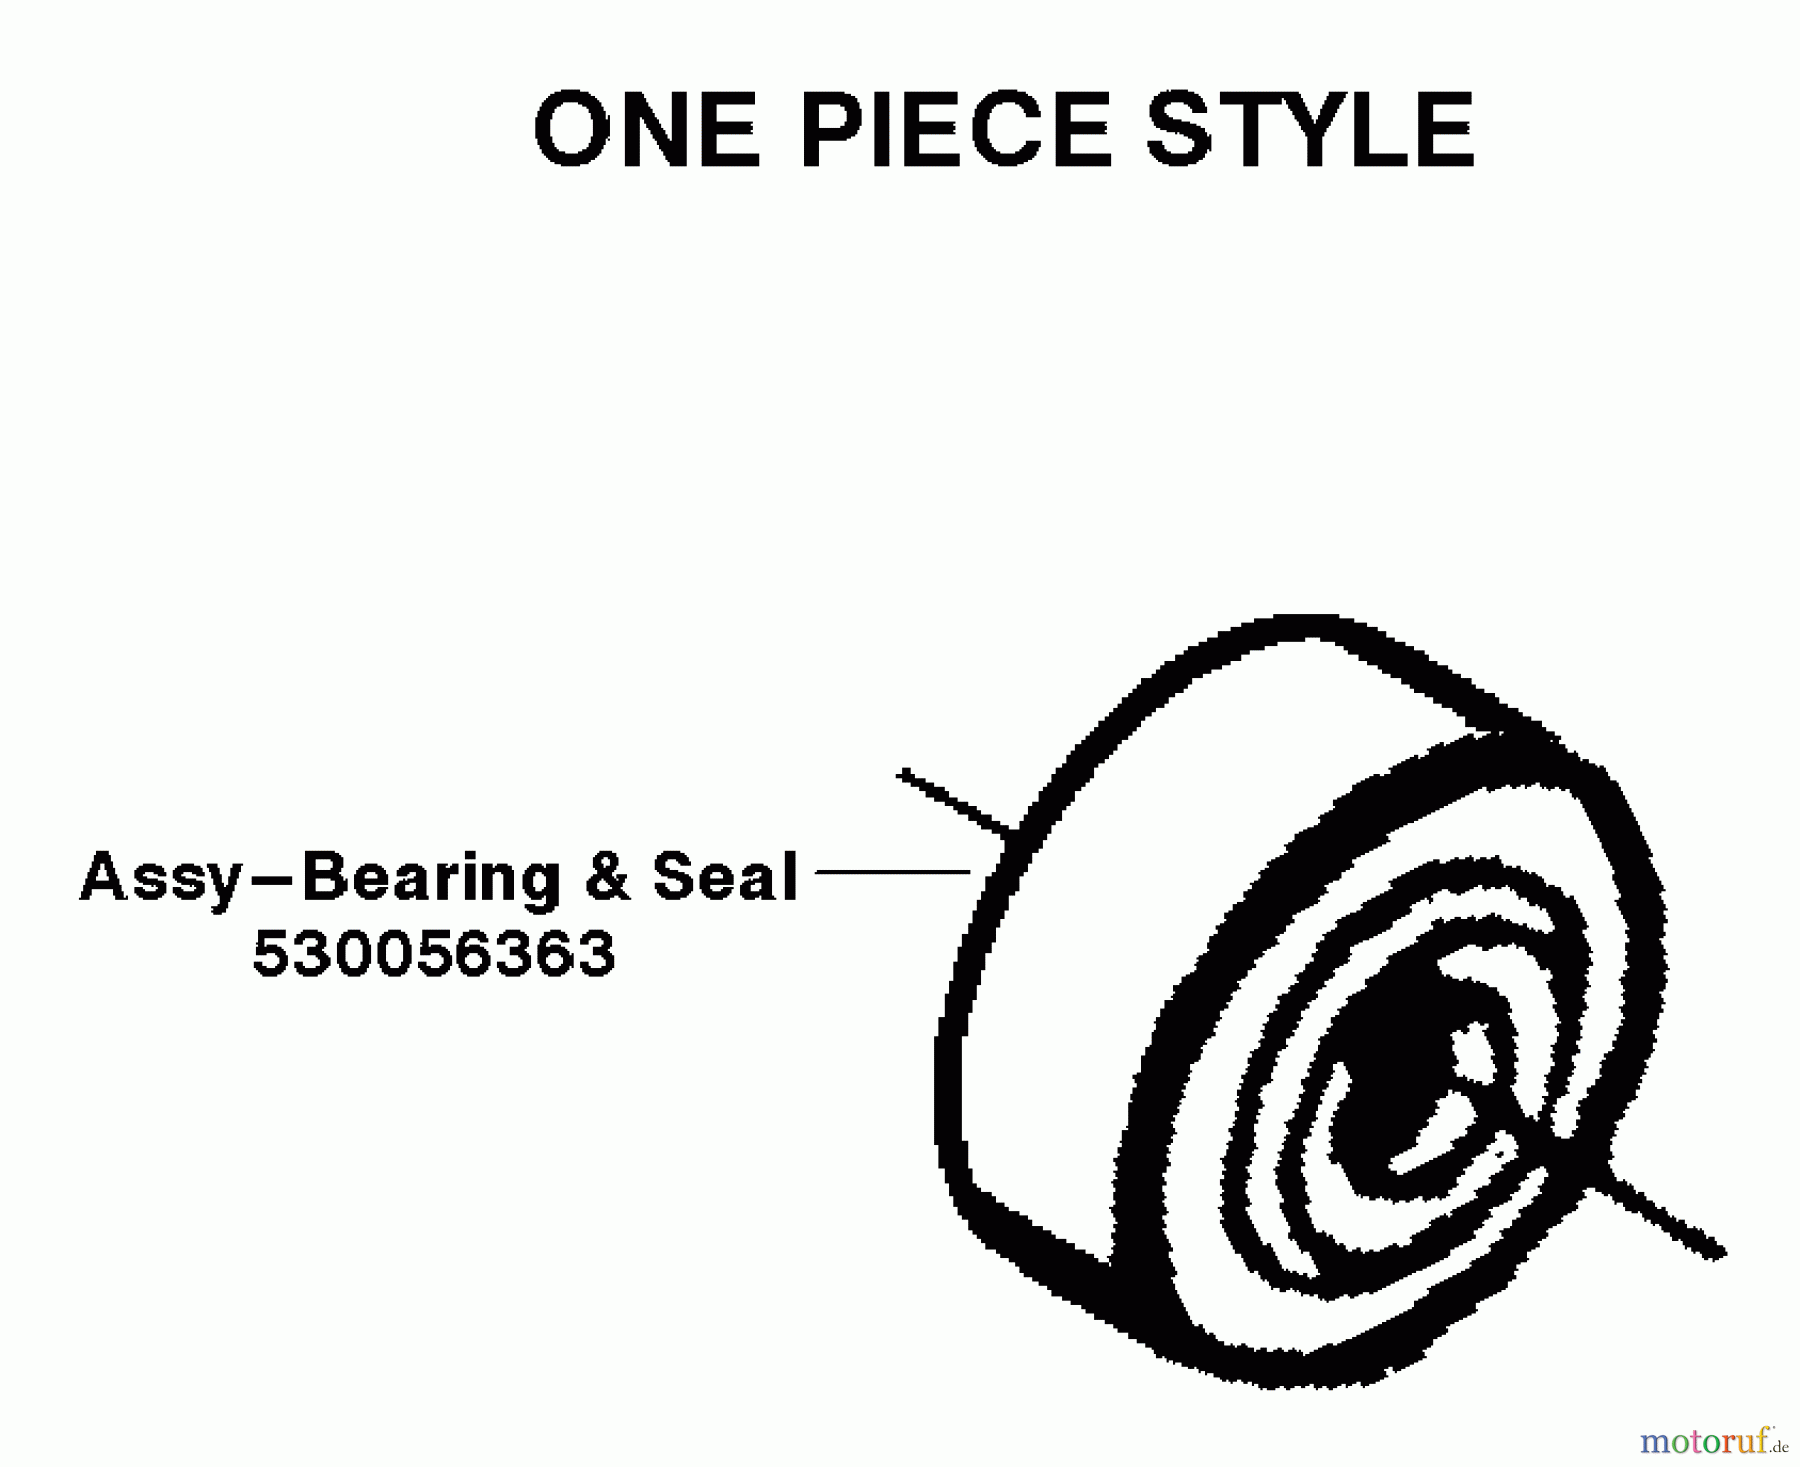  Poulan / Weed Eater Motorsägen 2775 (Type 4) - Poulan Chainsaw Bearing & Seal - One Piece Style